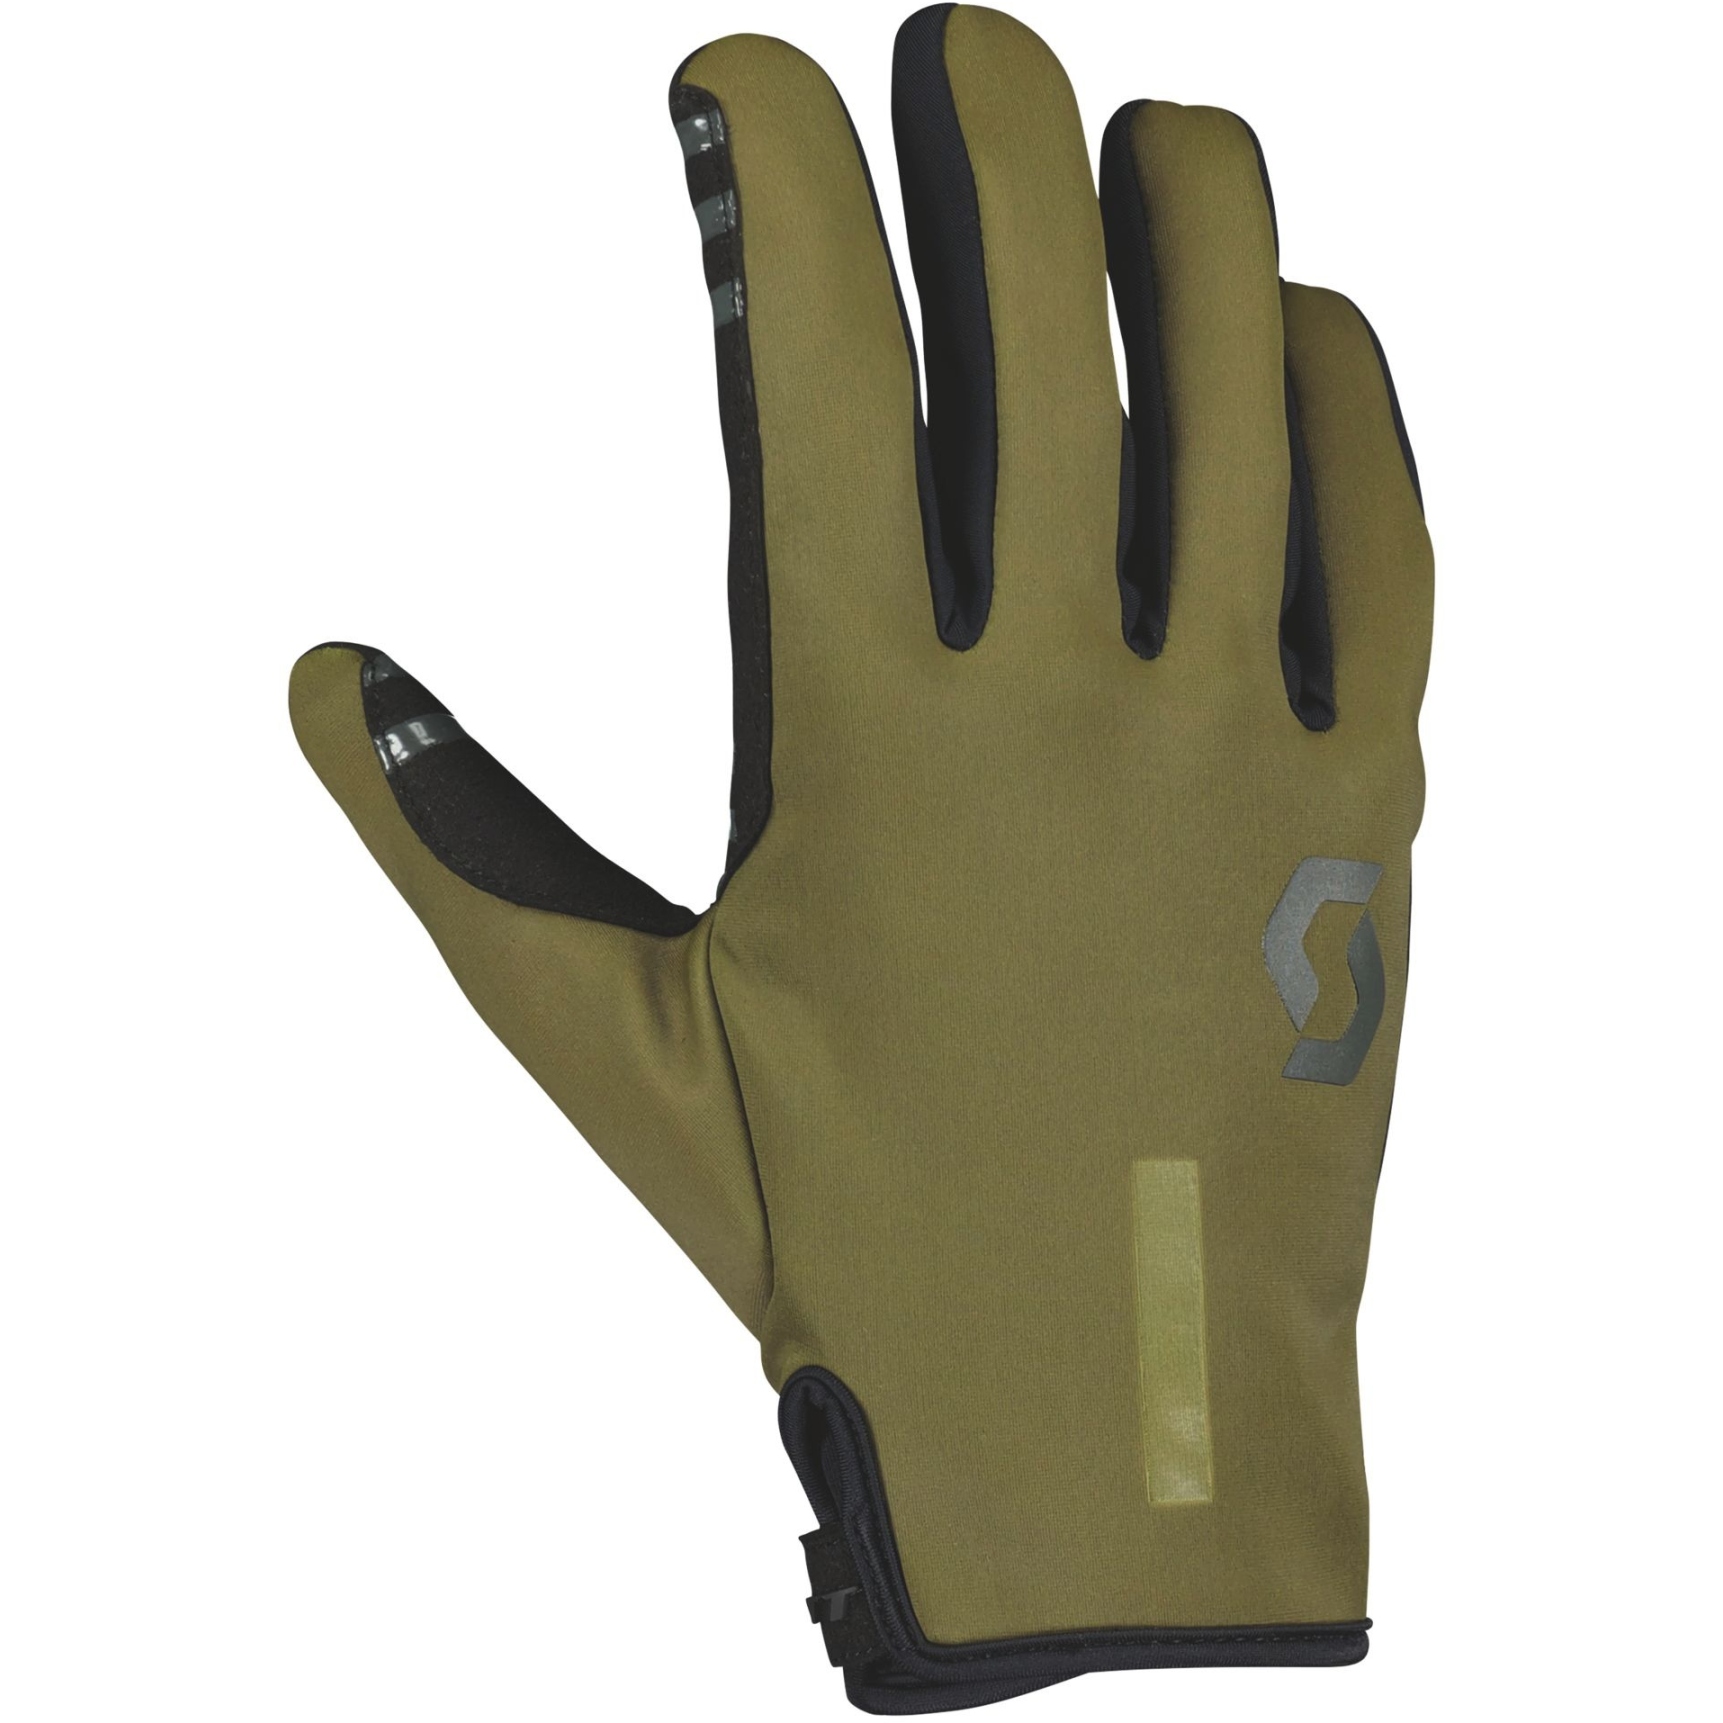 Produktbild von SCOTT Neoride Handschuhe - fir green